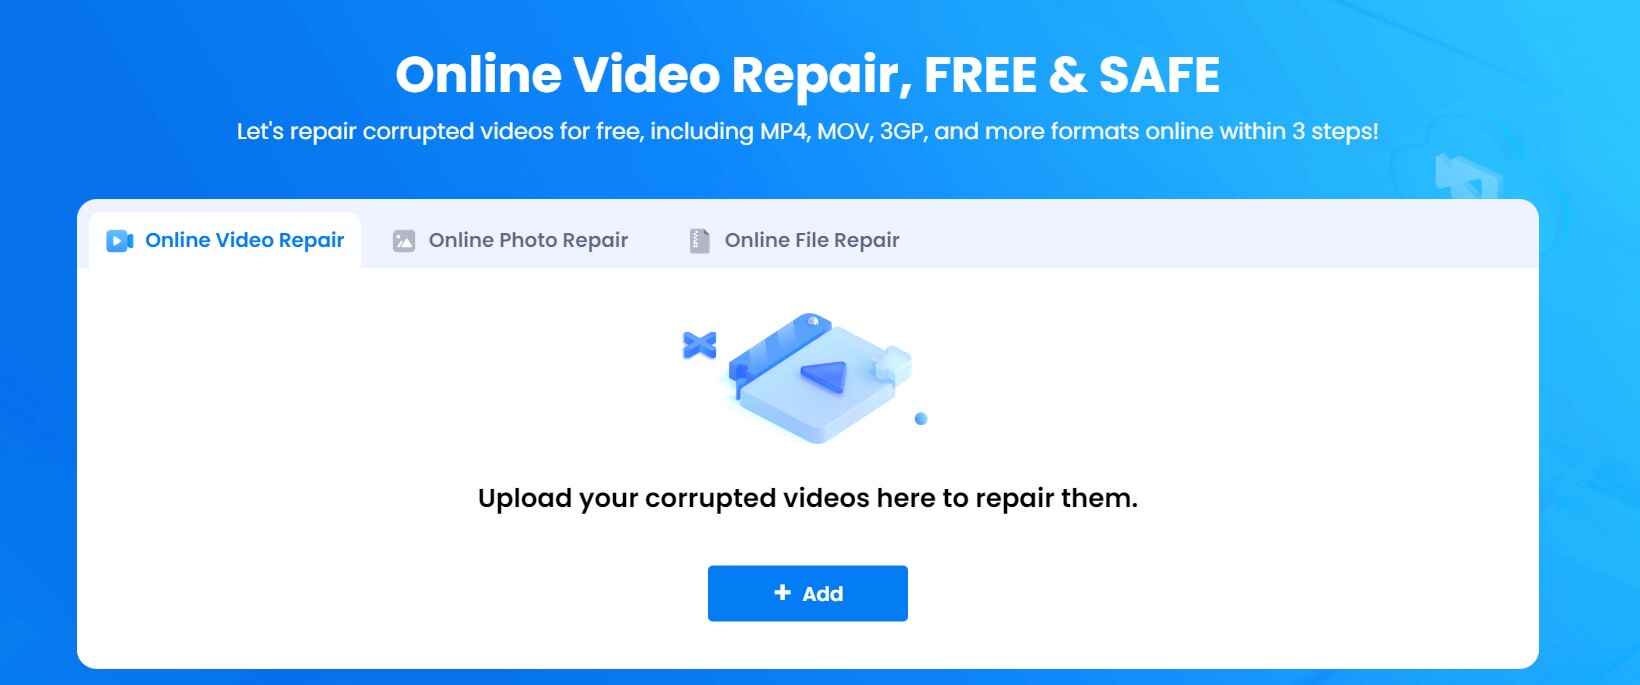 wondershare repairit online video repair tool